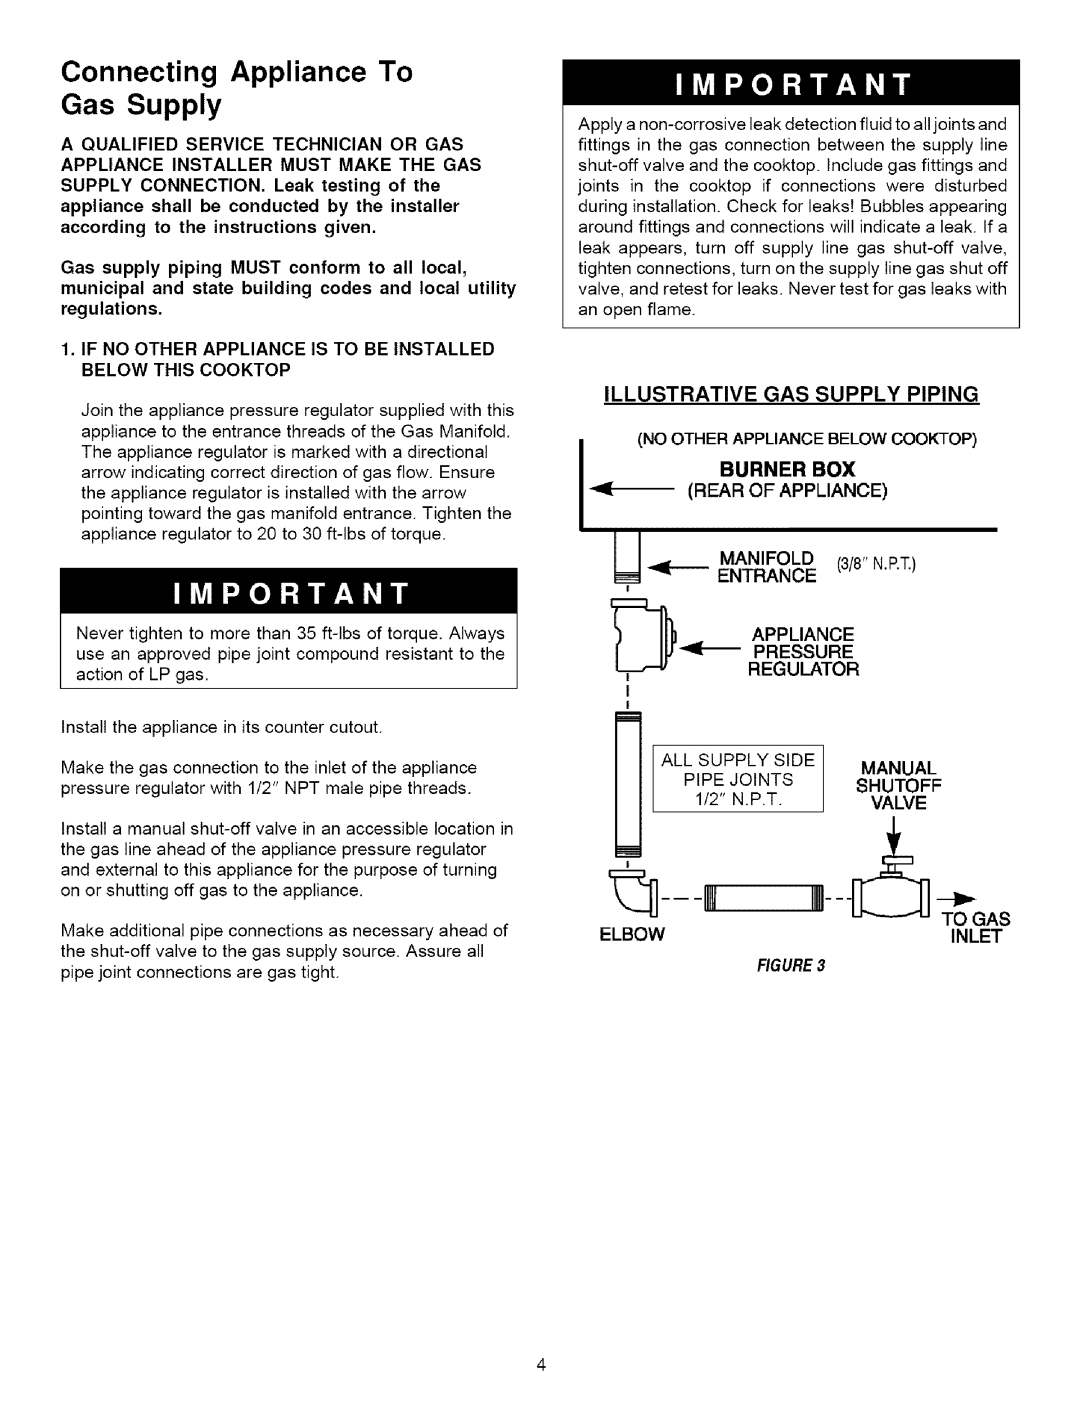 Maytag MGC6430 1111, Connecting Appliance To Gas Supply, Illustrative Gas Supply Piping Burner Box, Regulator, Shutoff 